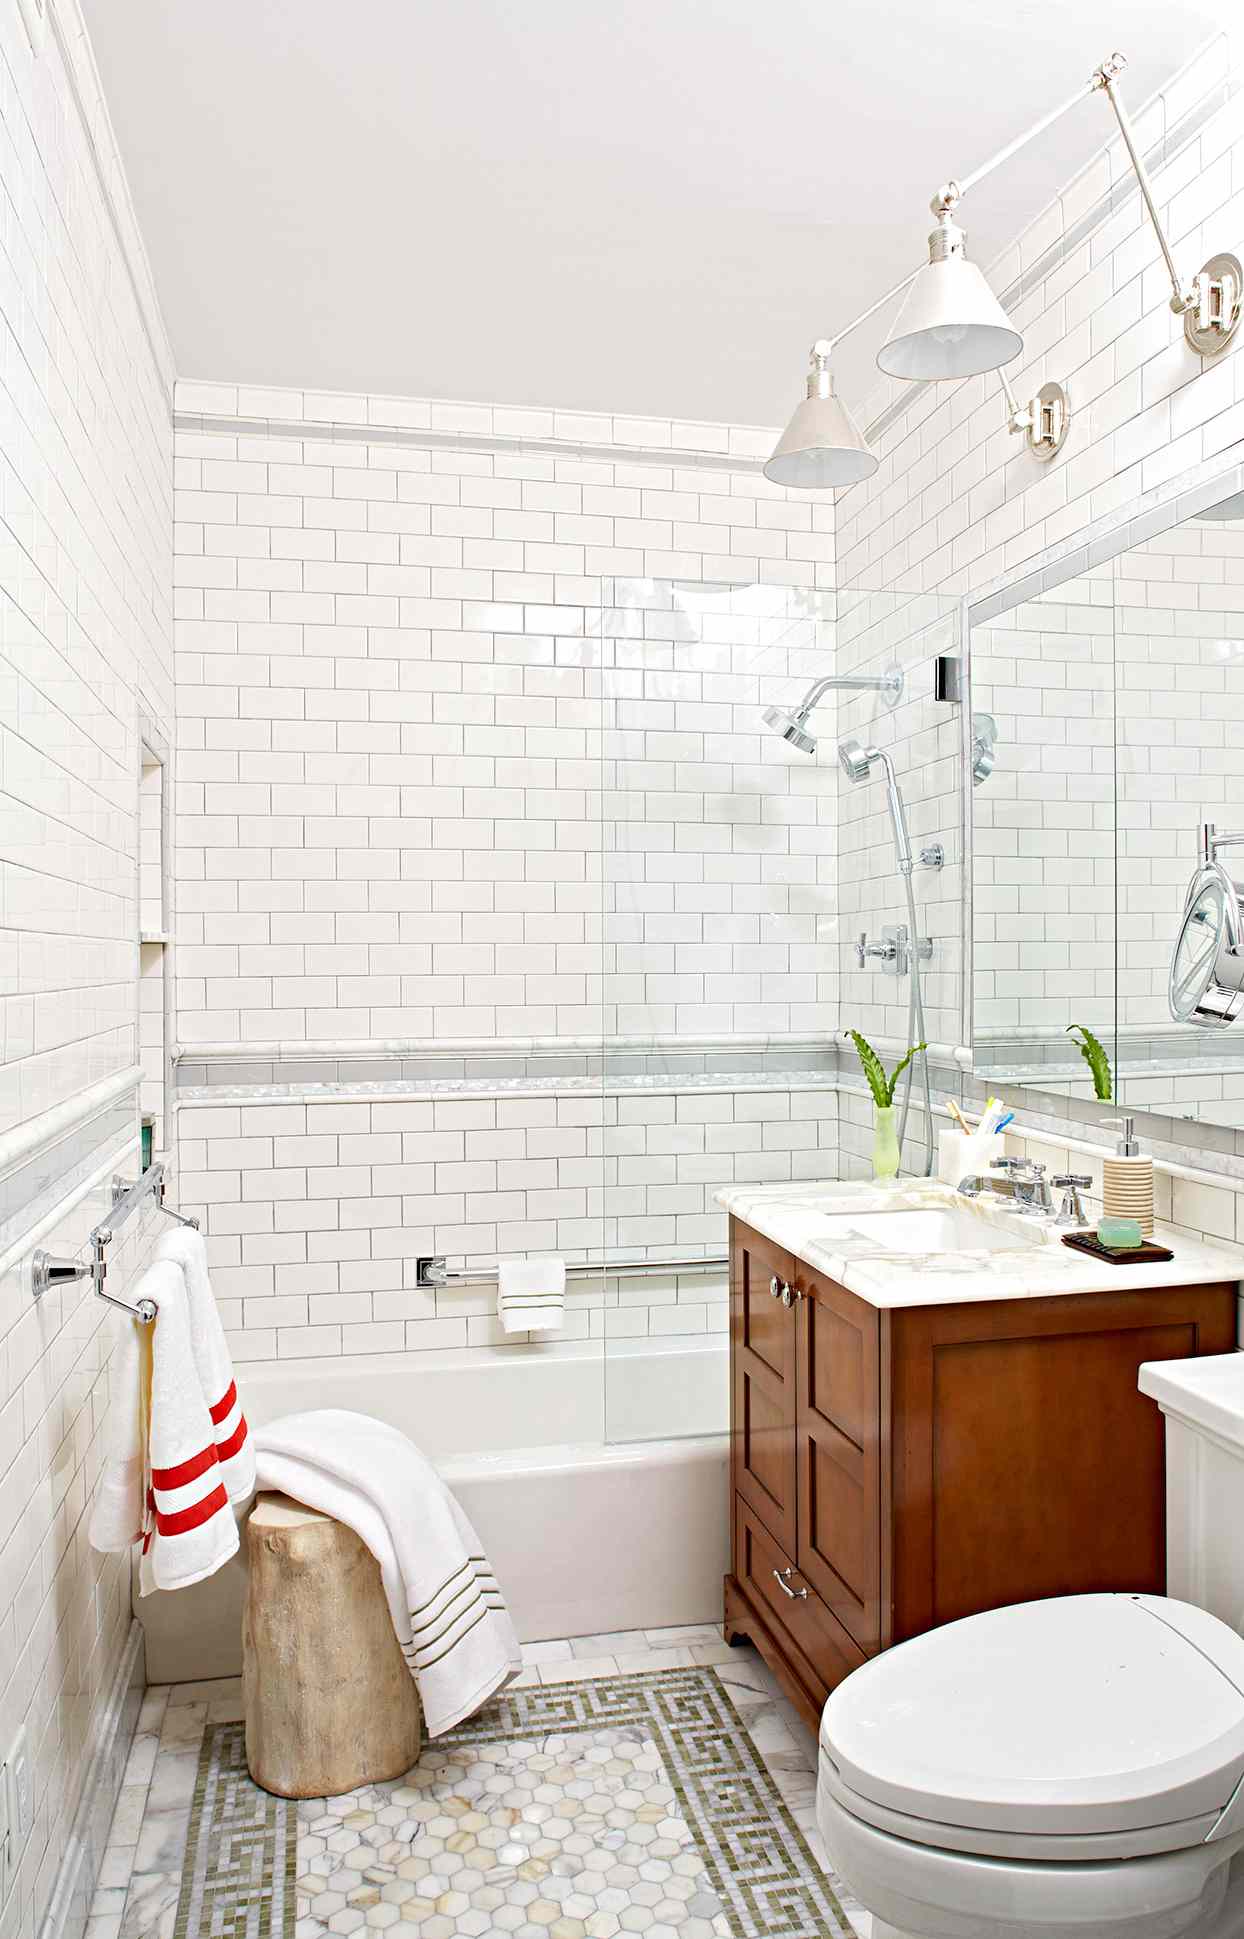 Tile A Shower Enclosure Or Tub Surround, Bathroom Tub Surround Tile Design Ideas